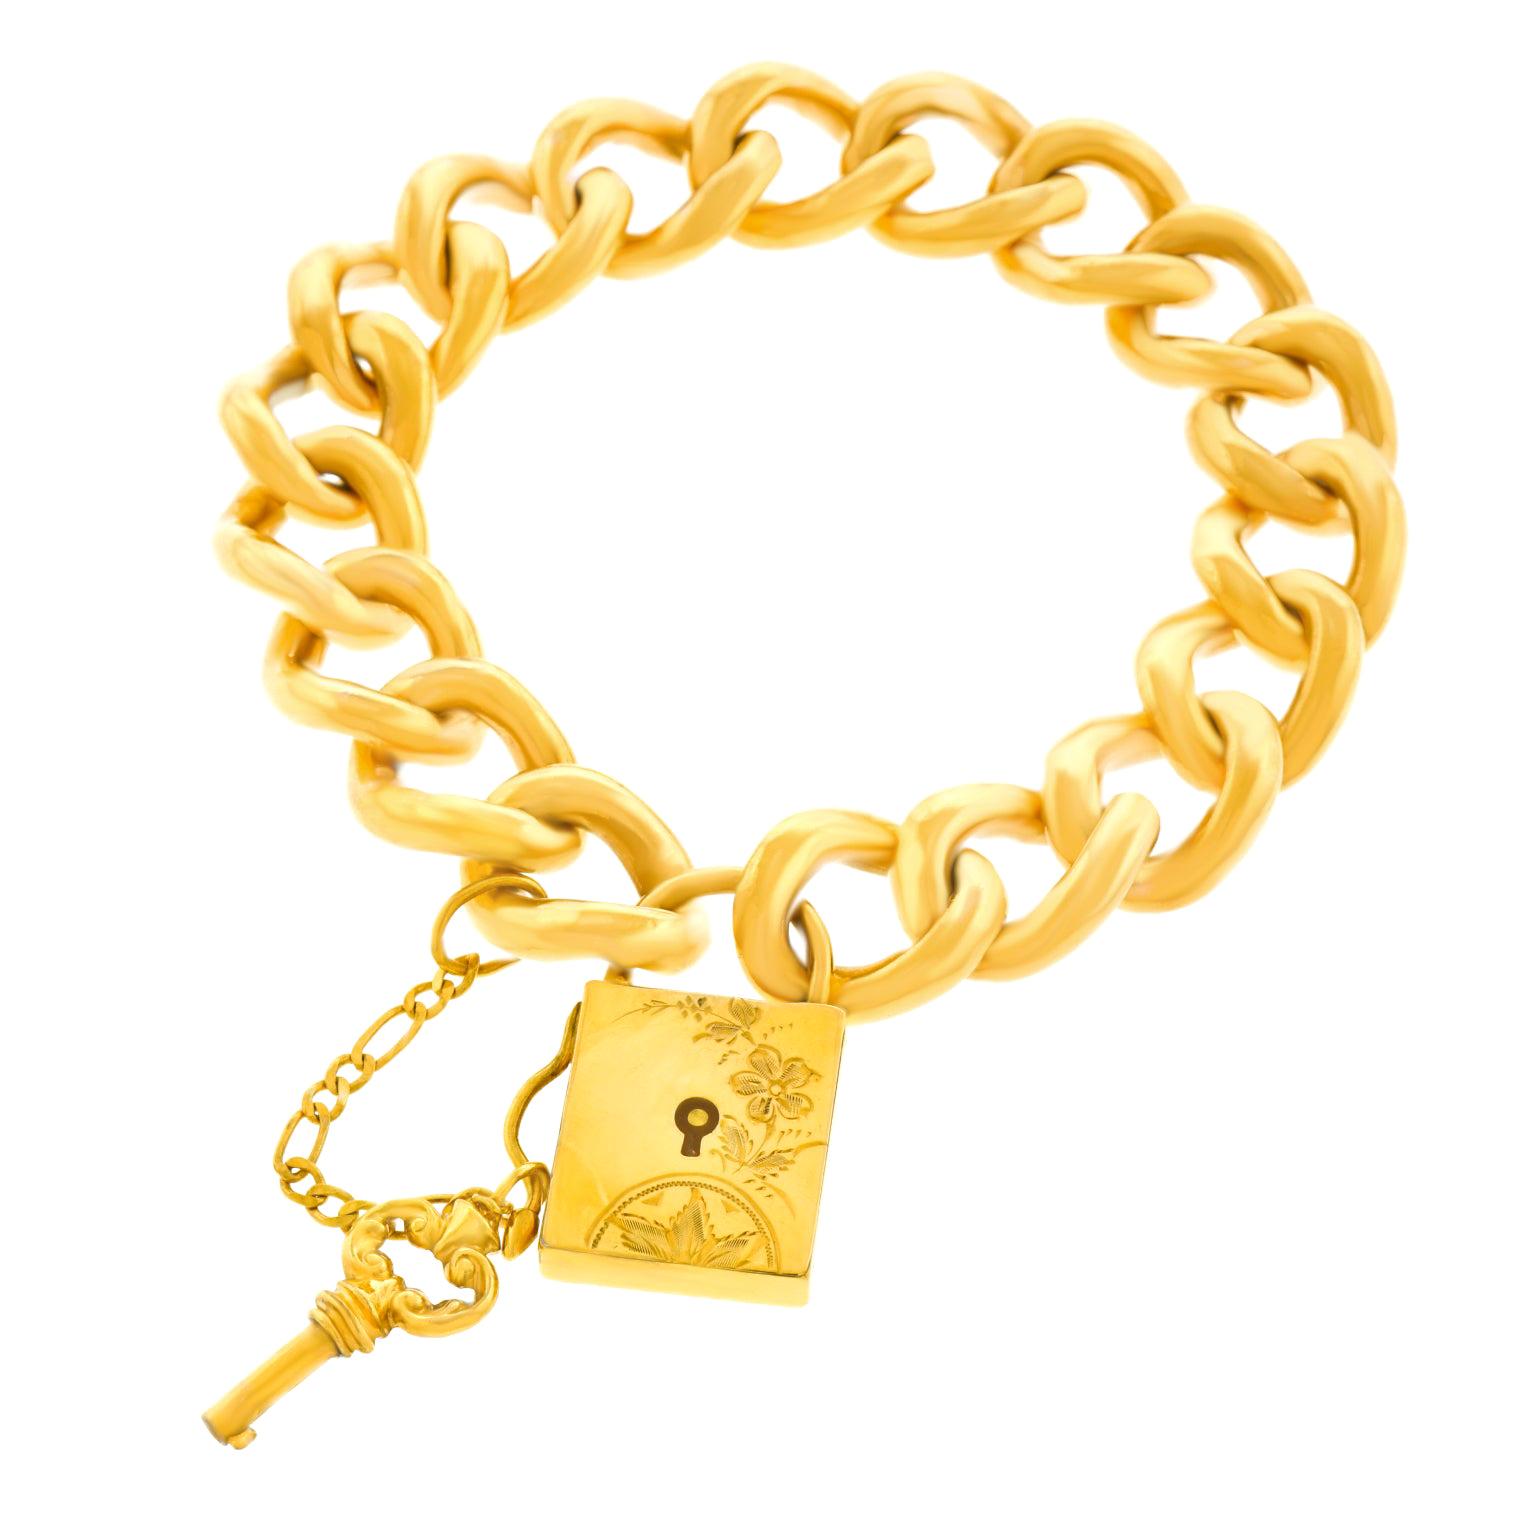 Antique Working Lock and Key Gold Bracelet